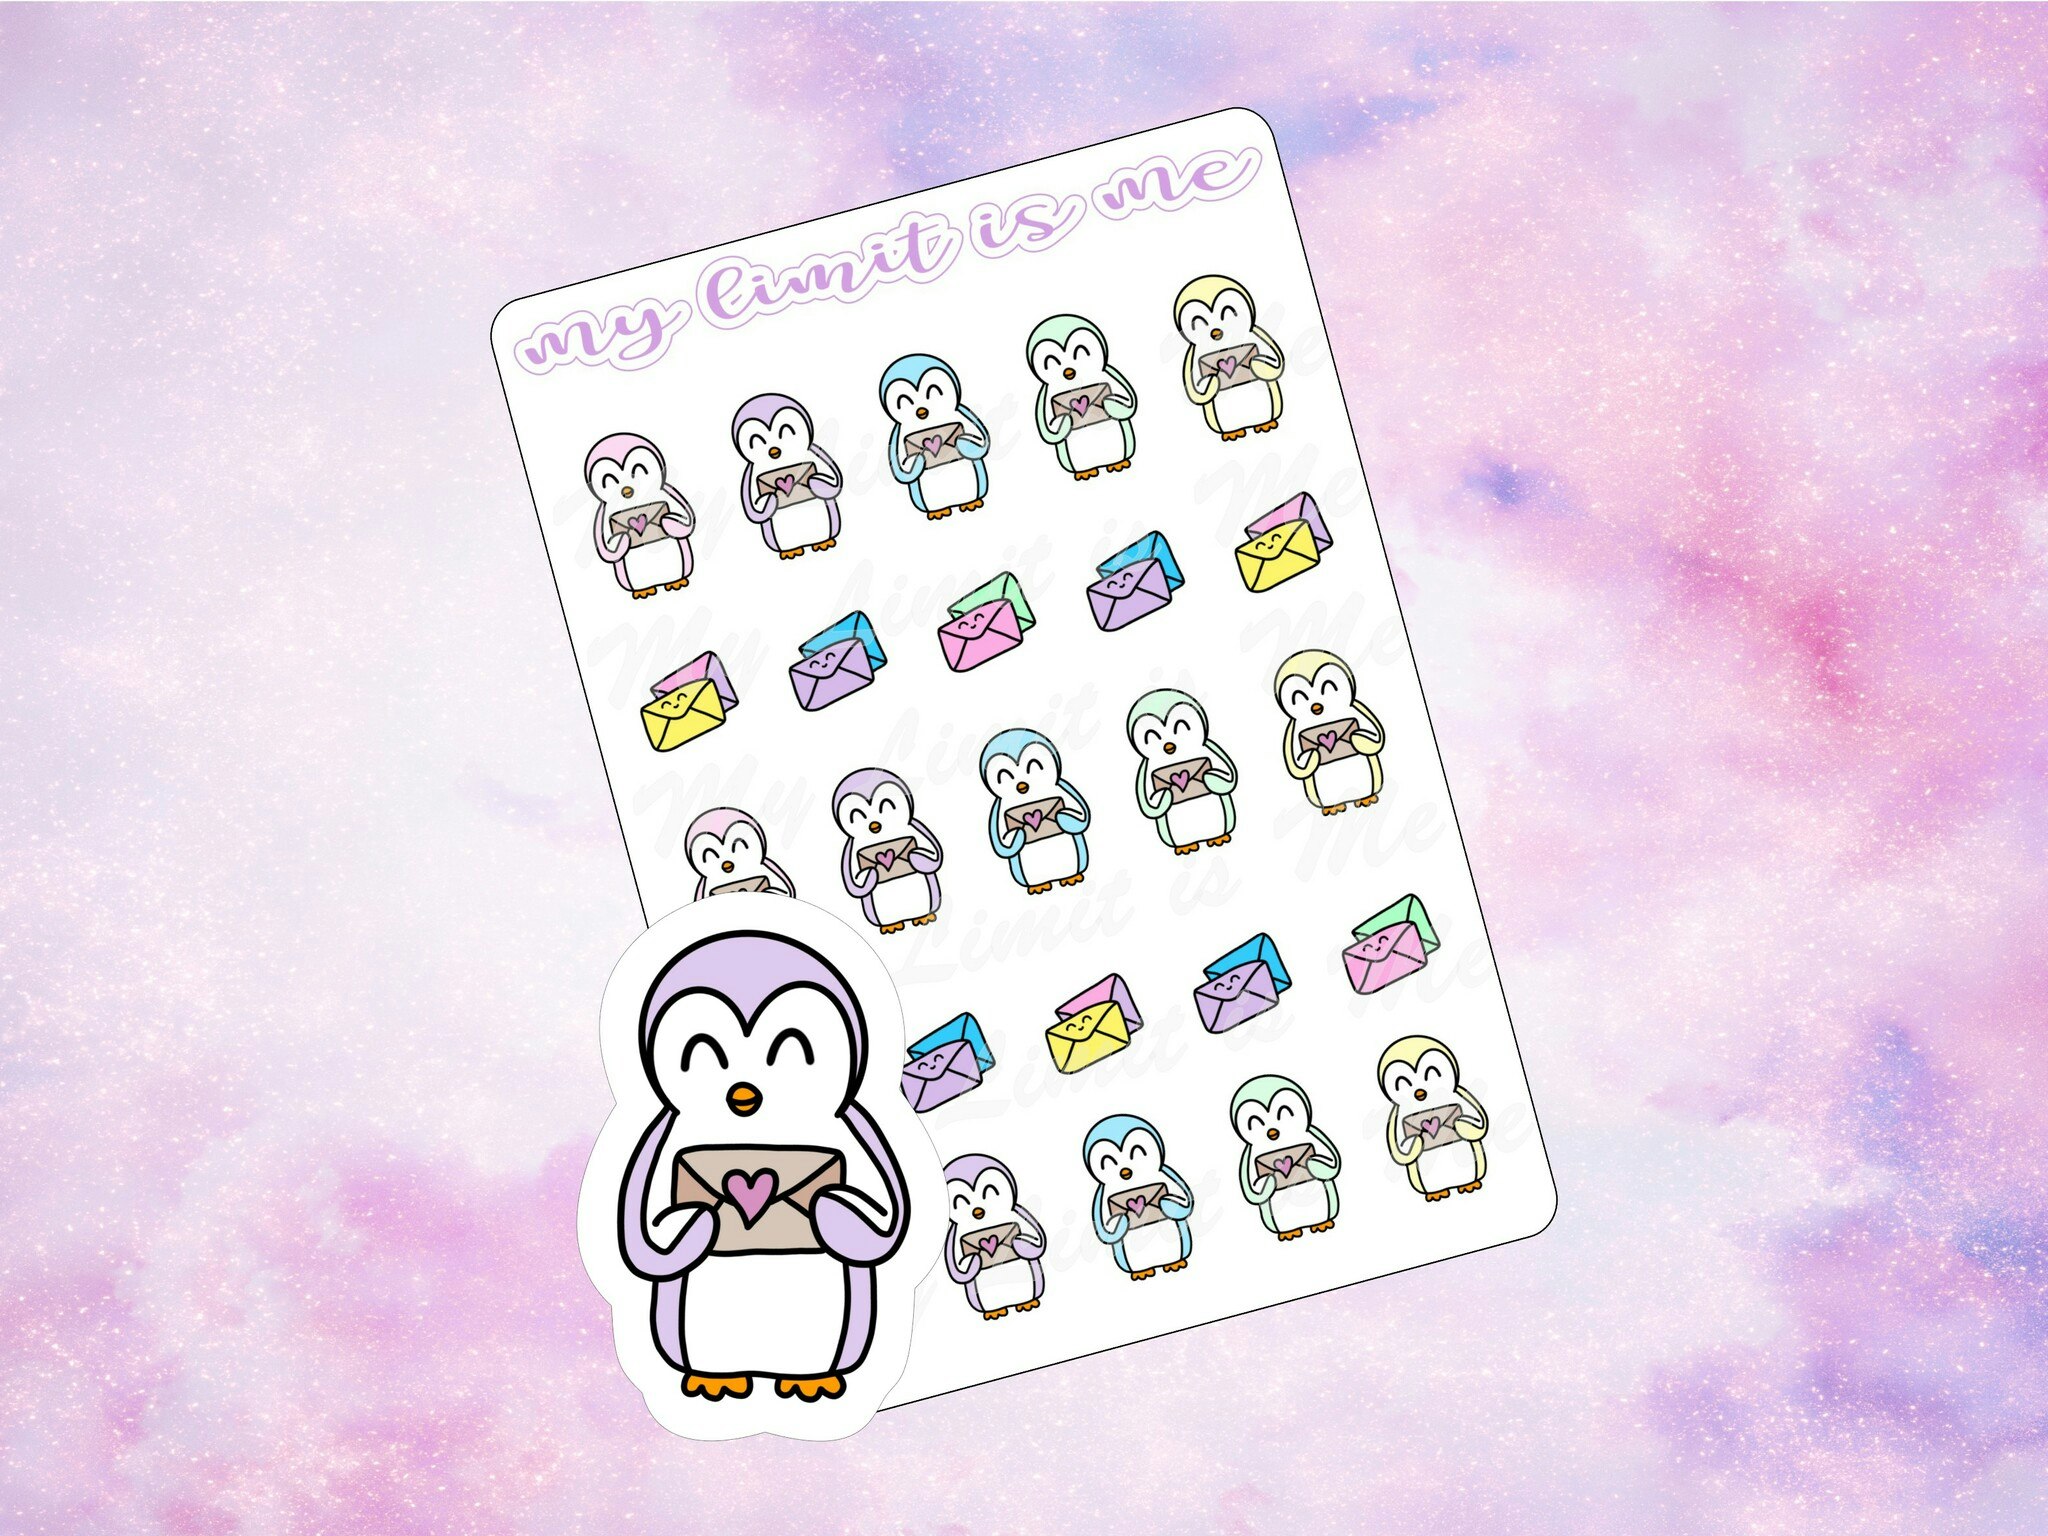 Happy Mail penguins ♥